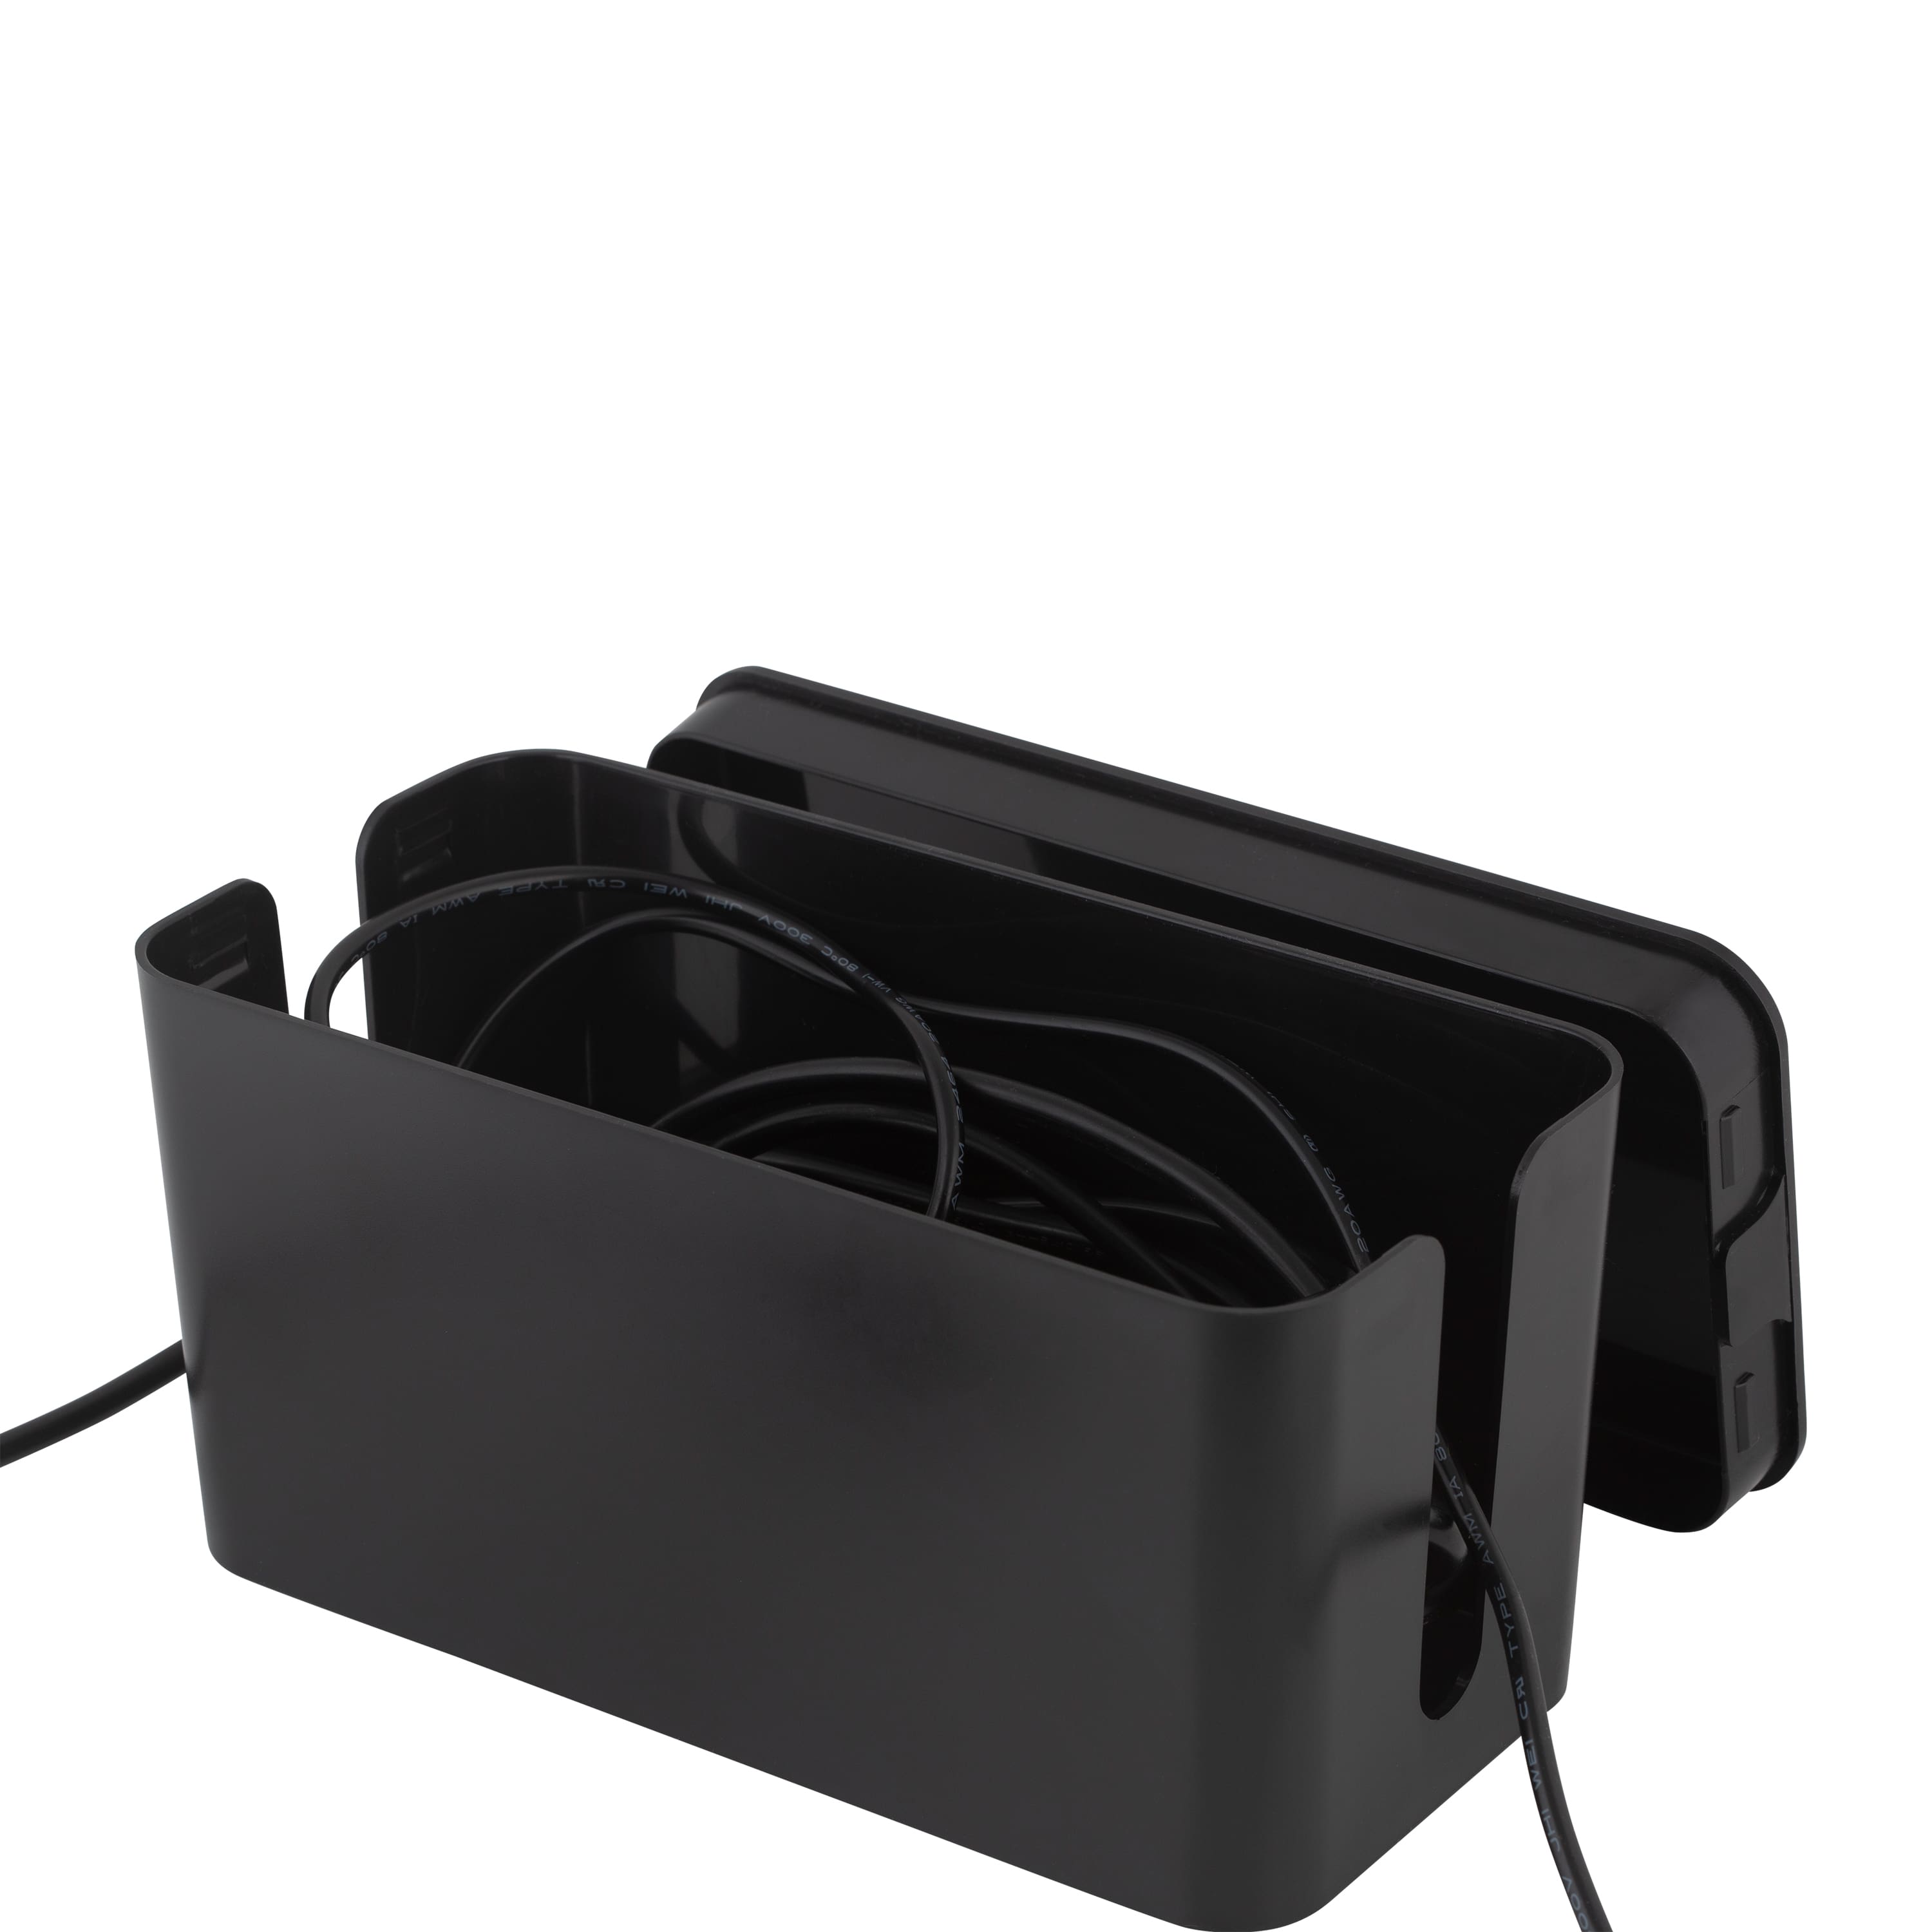 Simplify Black Cable Organizer Boxes, 2ct.